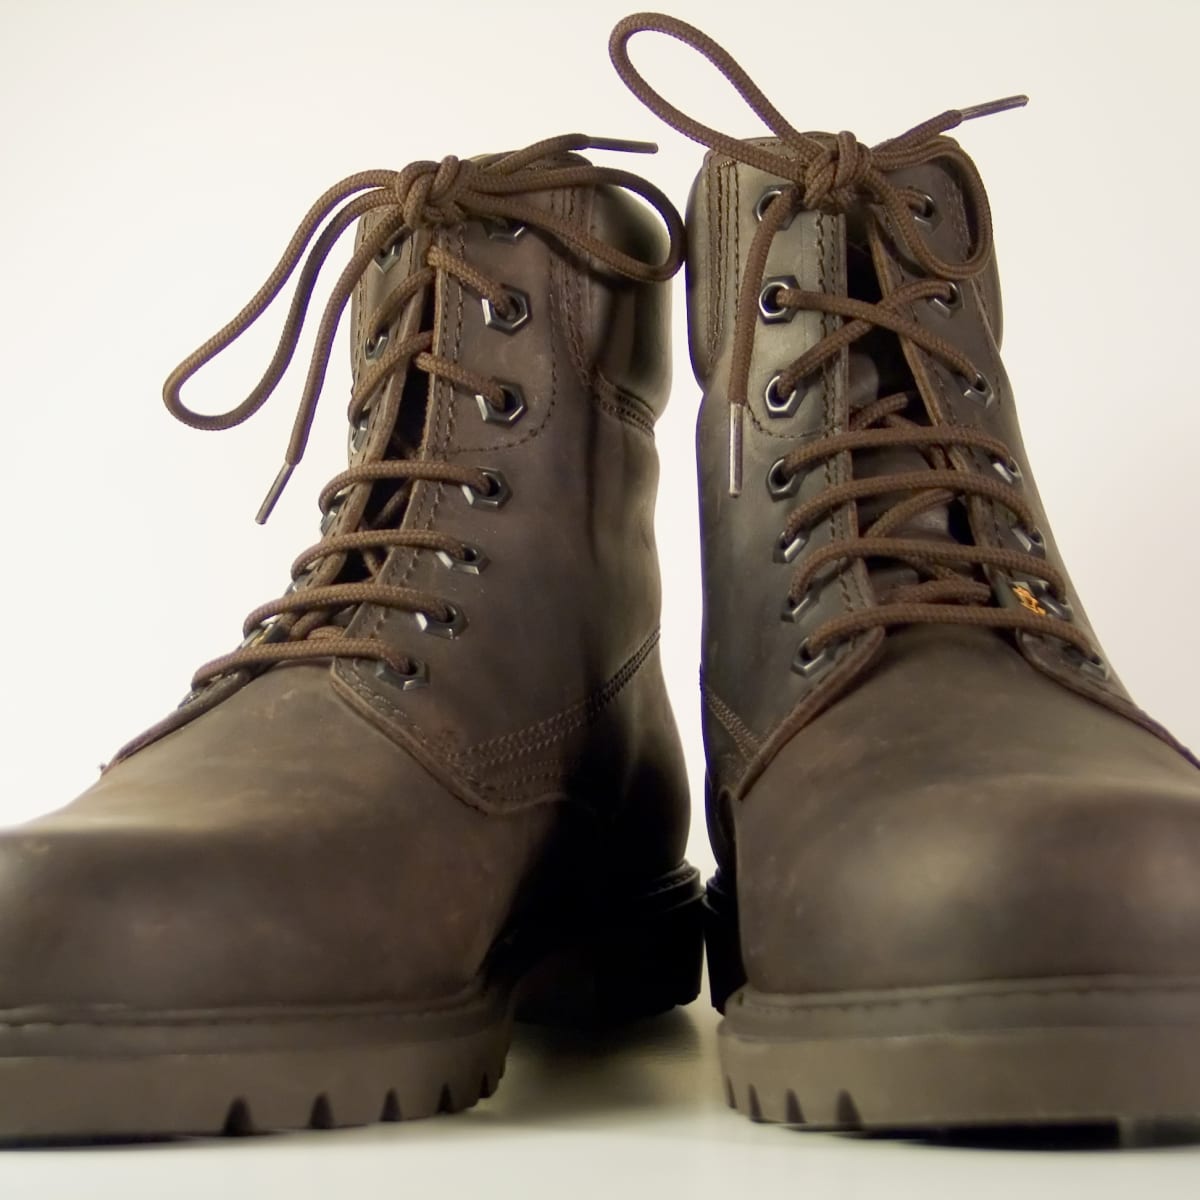 shoe polish boots